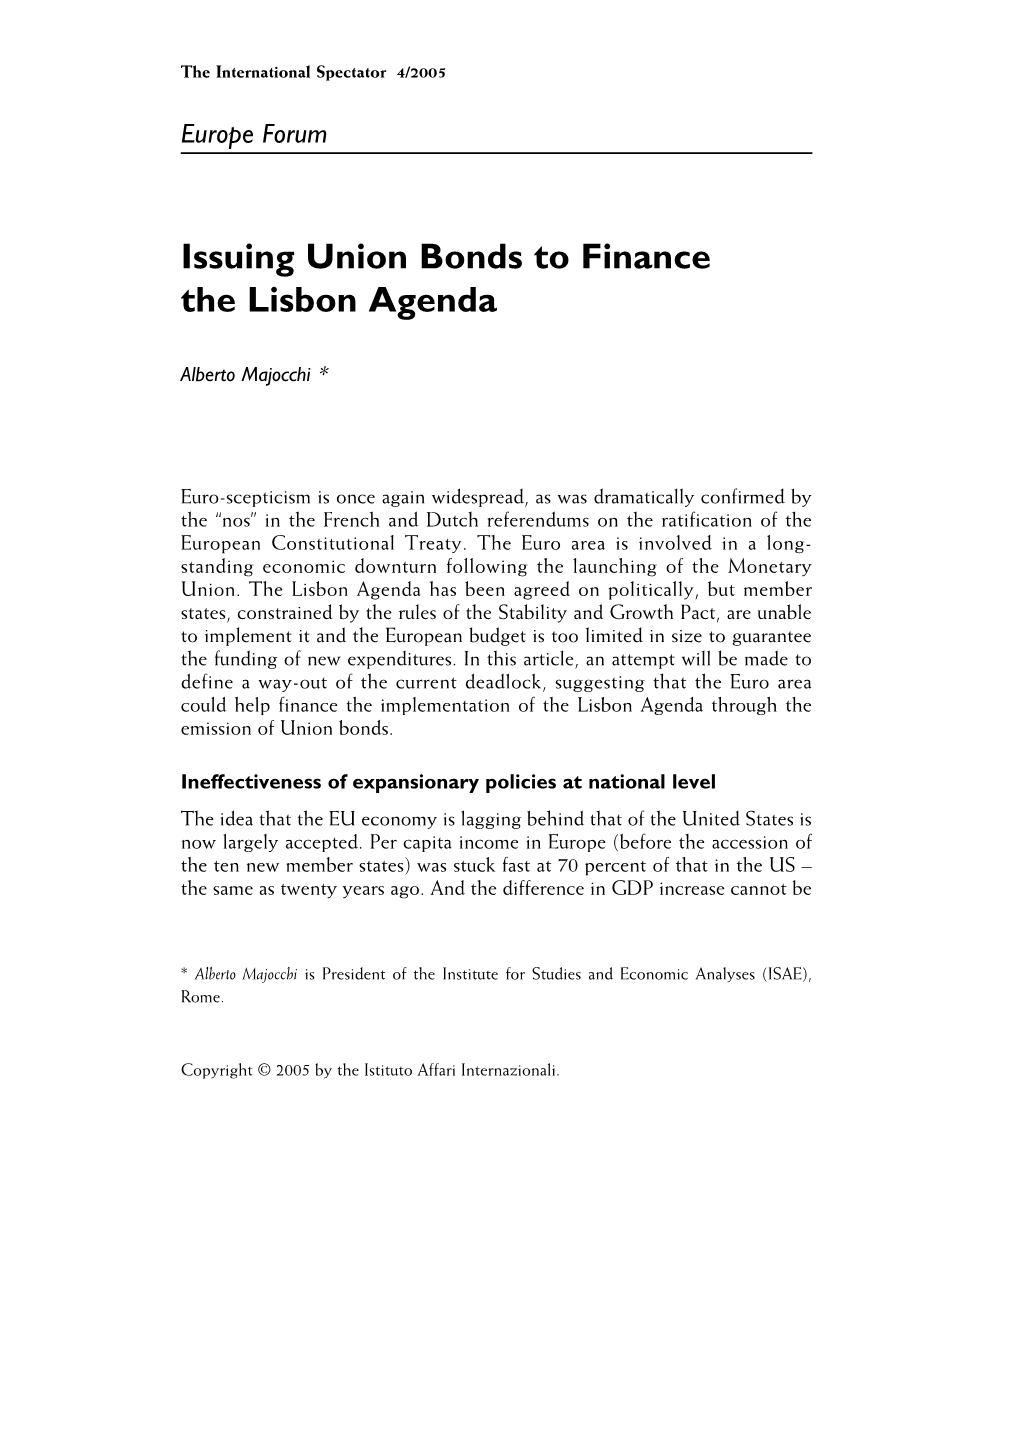 Issuing Union Bonds to Finance the Lisbon Agenda